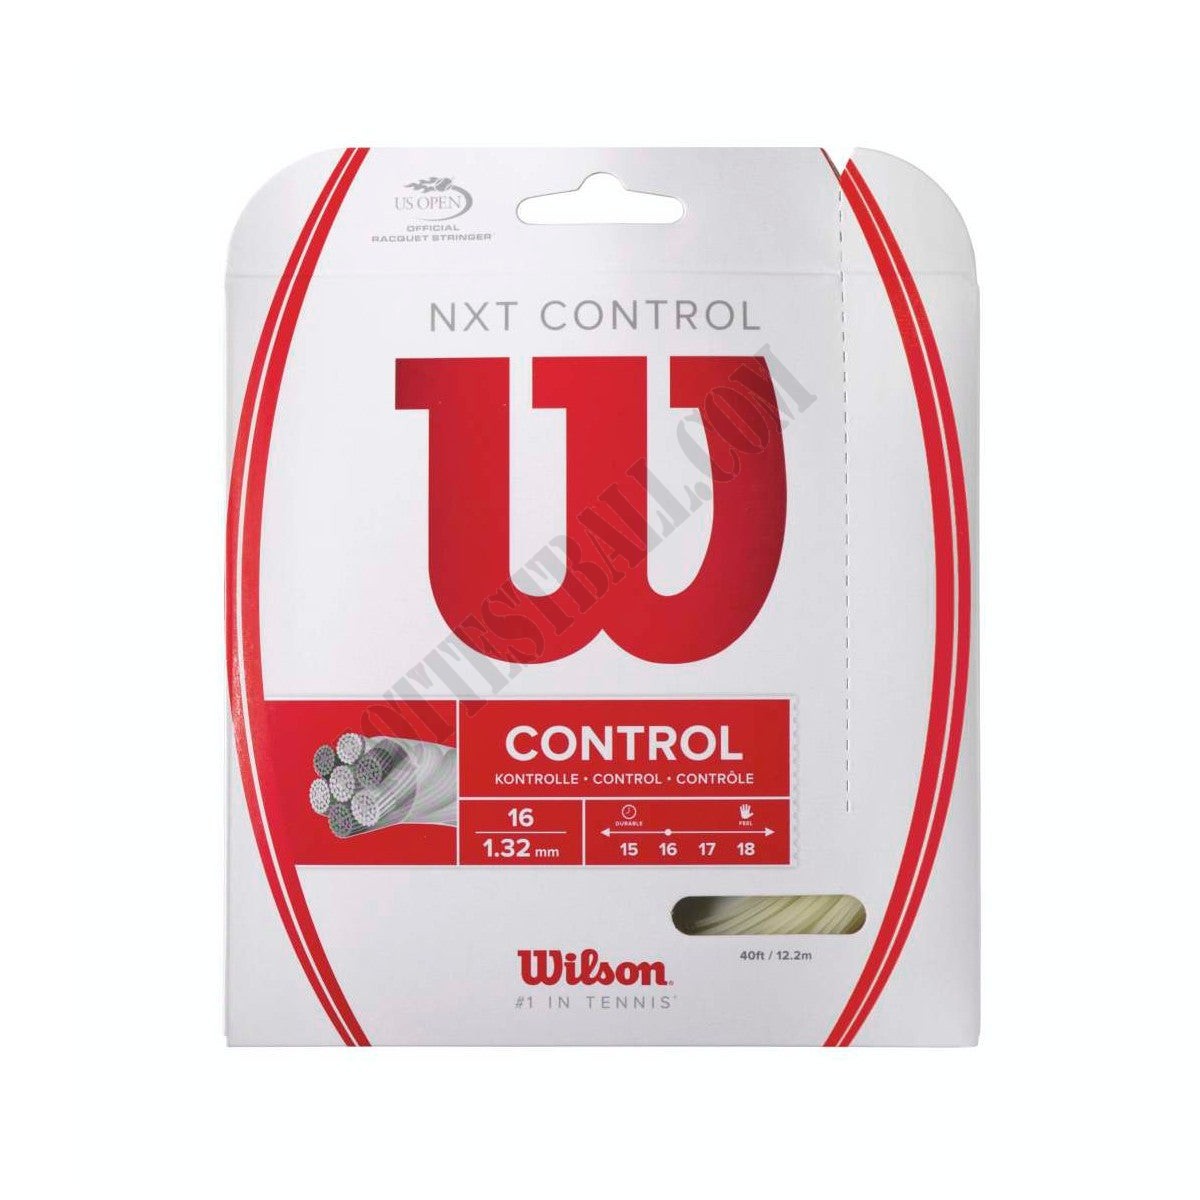 NXT Control String Set - Natural, 16 GA (1.30mm) - Wilson Discount Store - -0